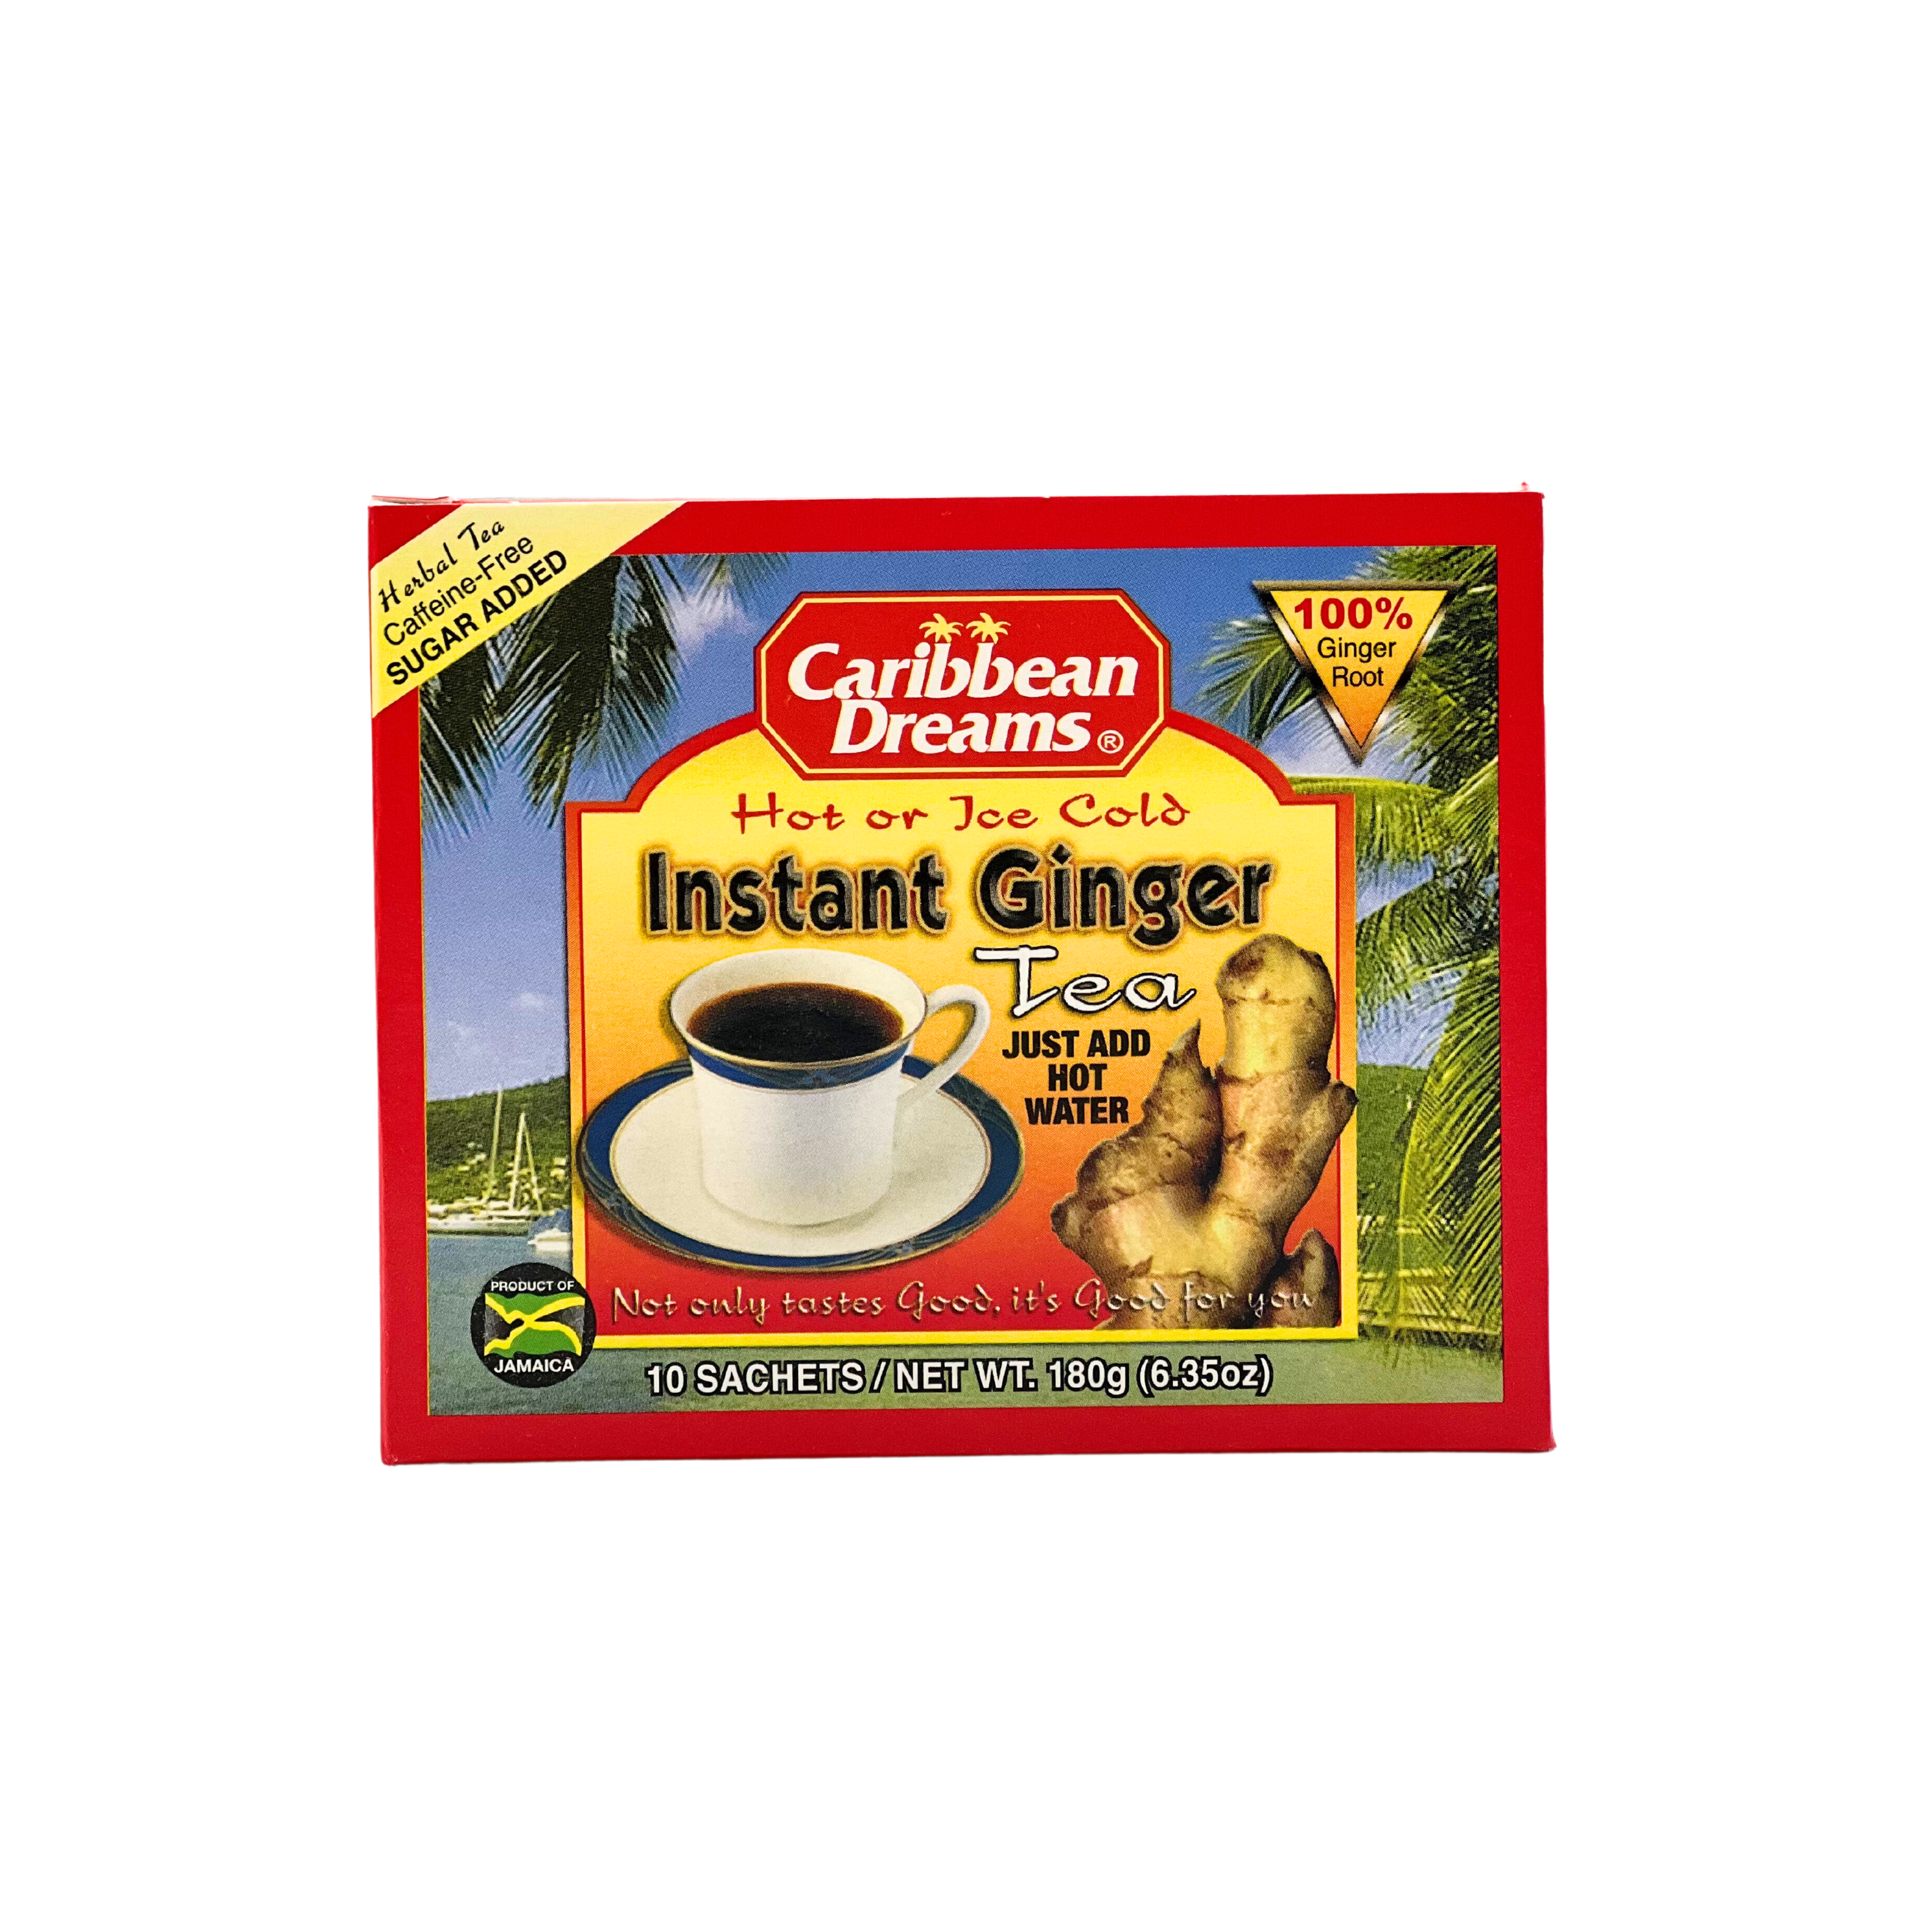 Cd Instant Ginger crystal sweet Tea 18g